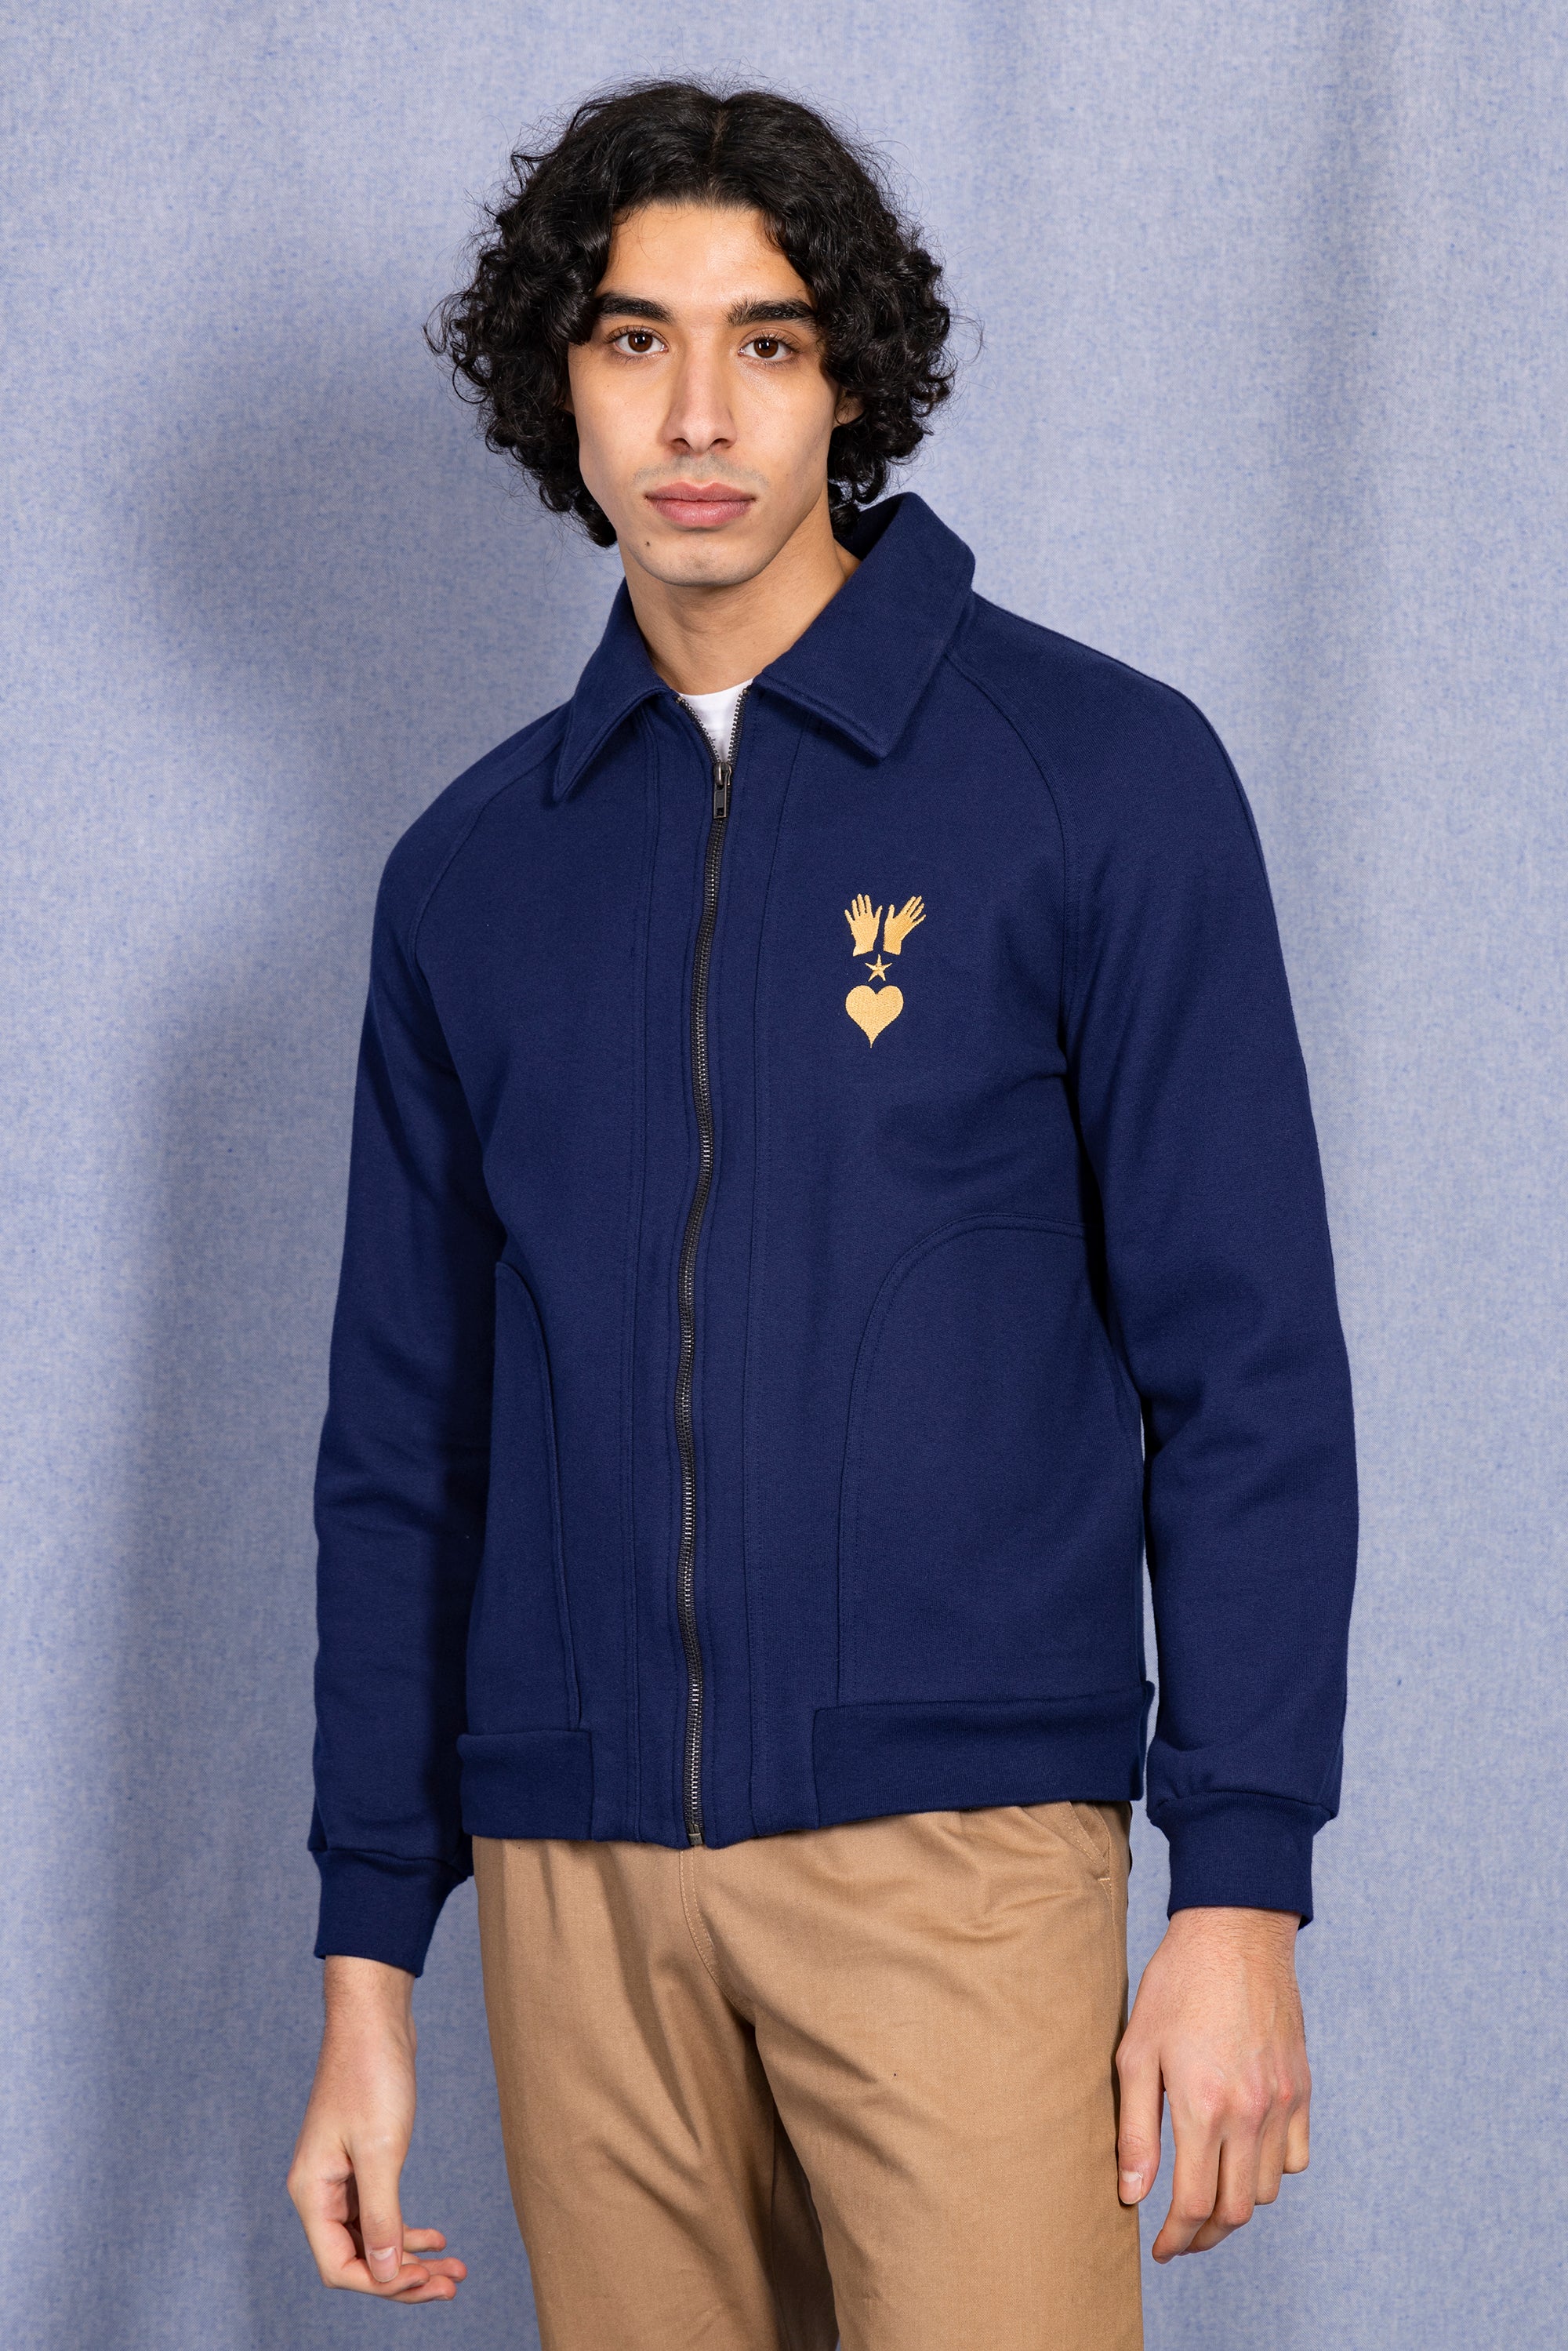 Elegant men's navy blue sports jacket with structured stitching, ethical fashion, spring summer, Peru